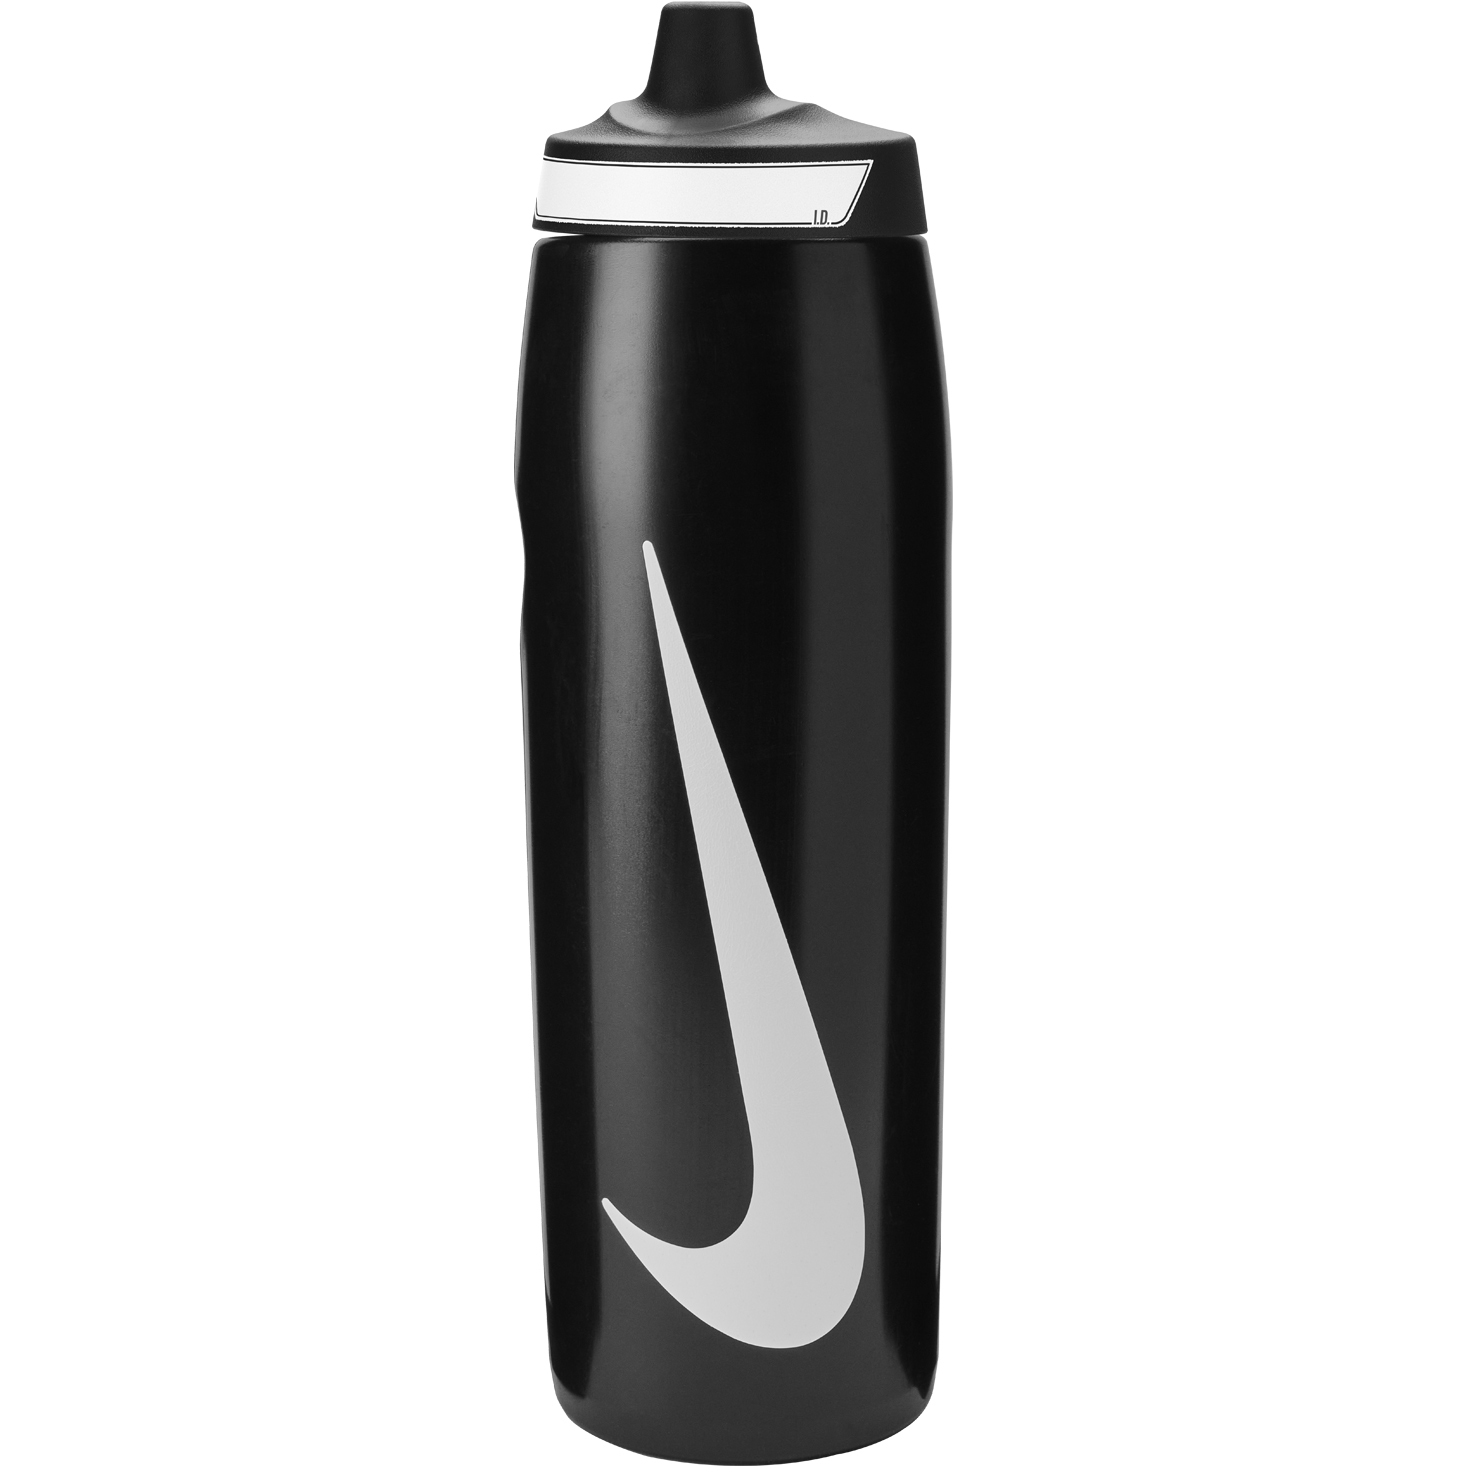 Productfoto van Nike Refuel Sport-Waterfles 32 oz / 946ml - zwart/zwart/wit 091